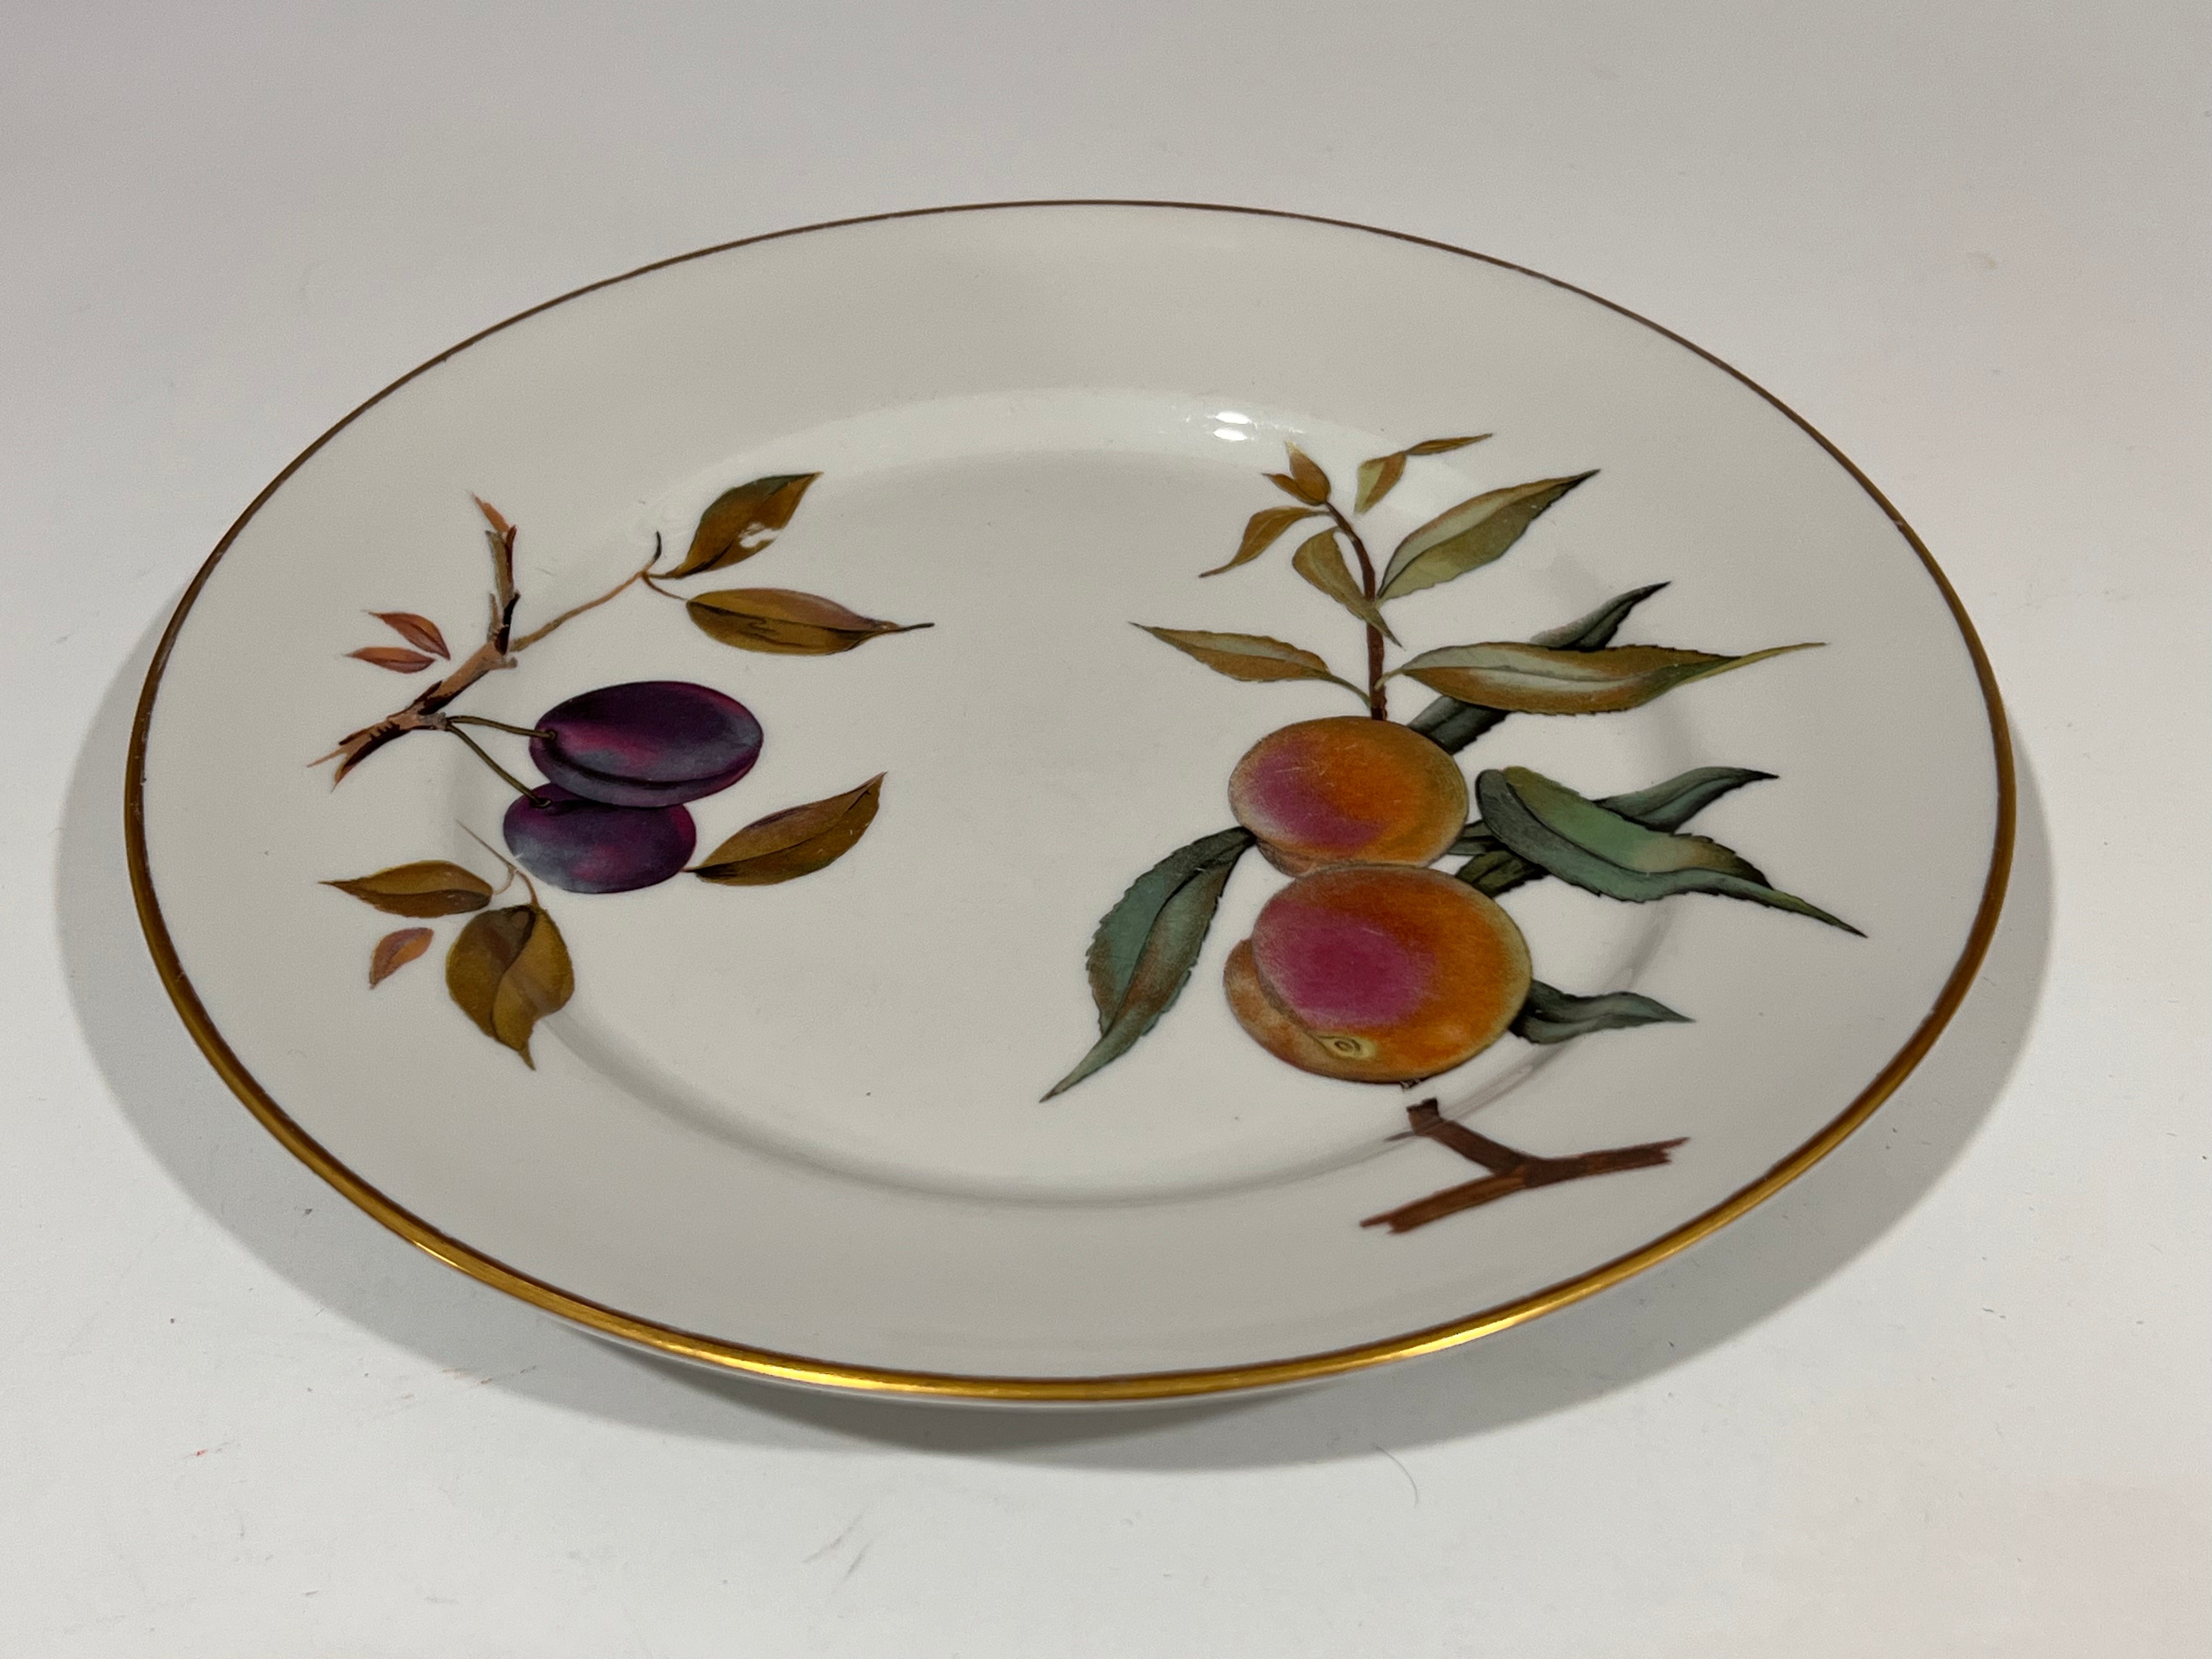 Royal Worchester Evesham Original Porcelain Fine China - Medium Size Platter  - Gold Trim - From England